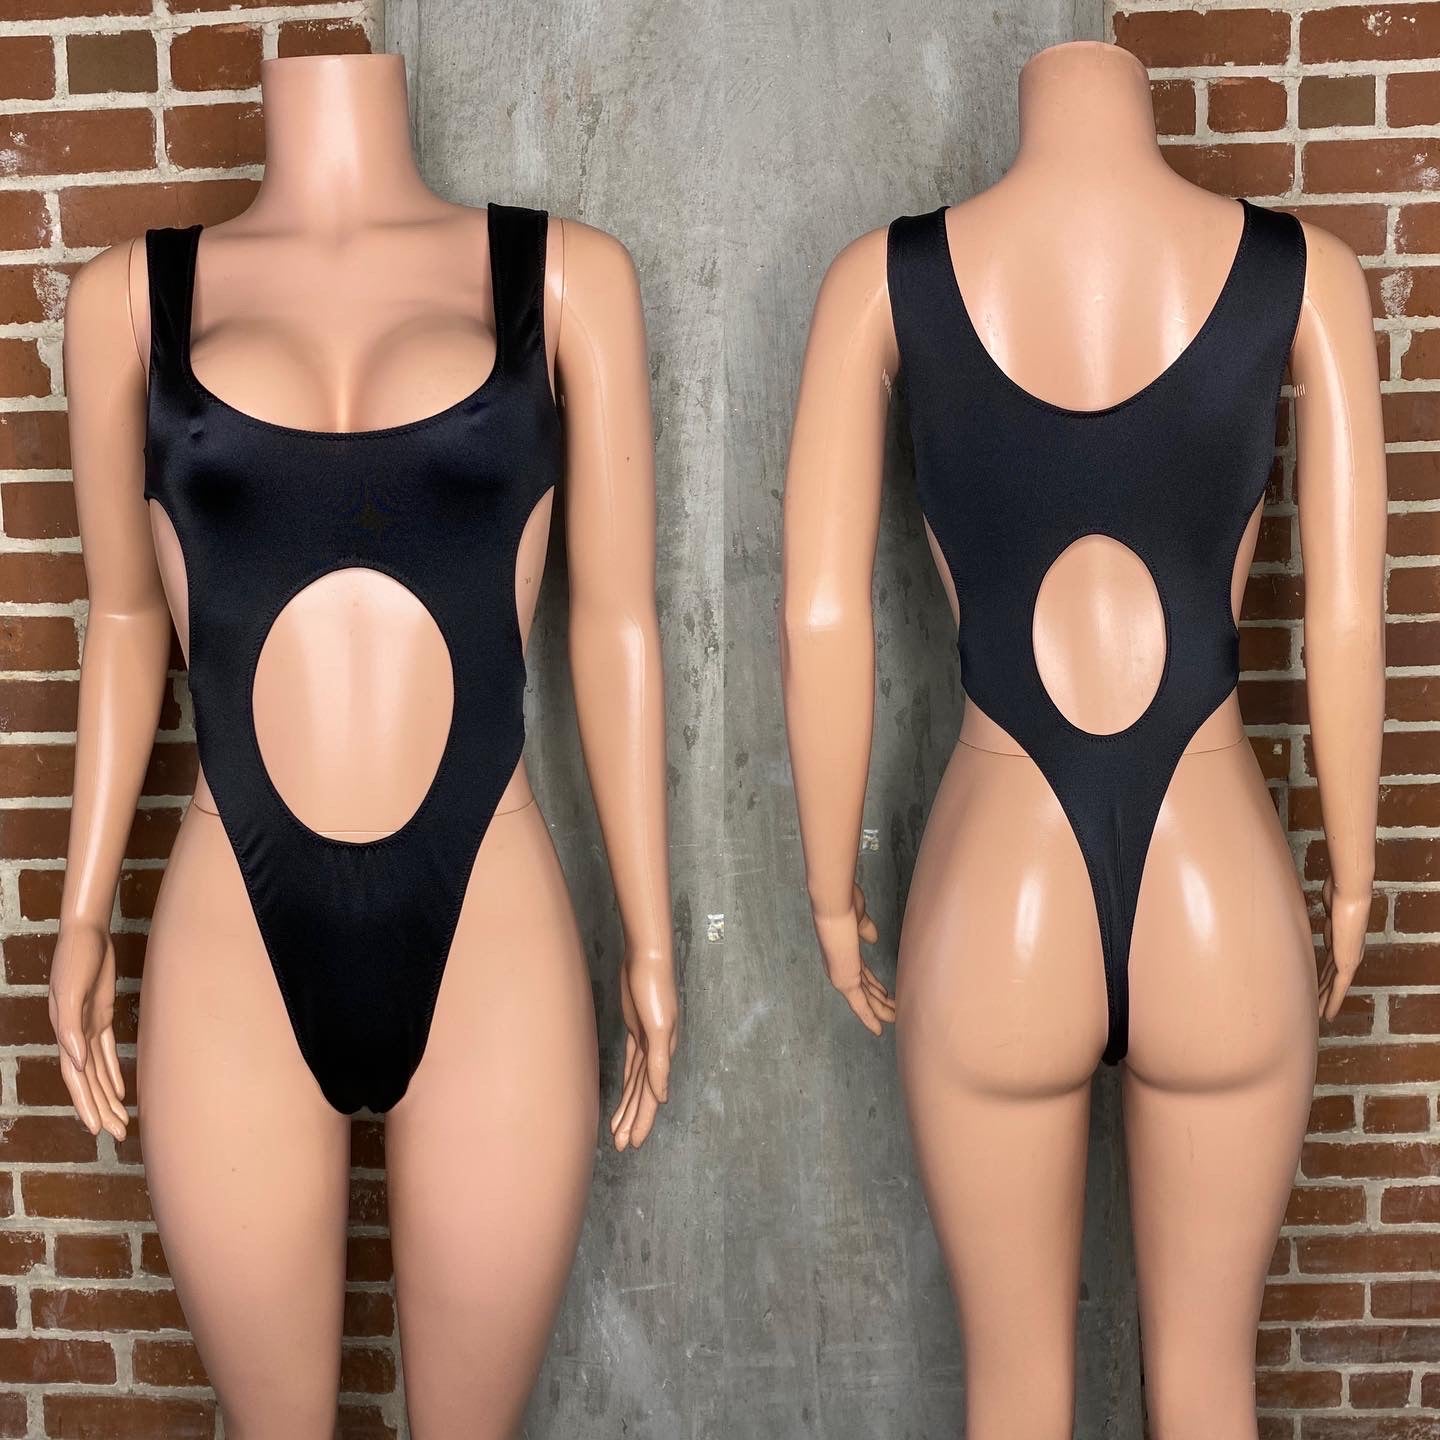 Cutout bodysuit with thong back. Bartender/waitress/bottle girl